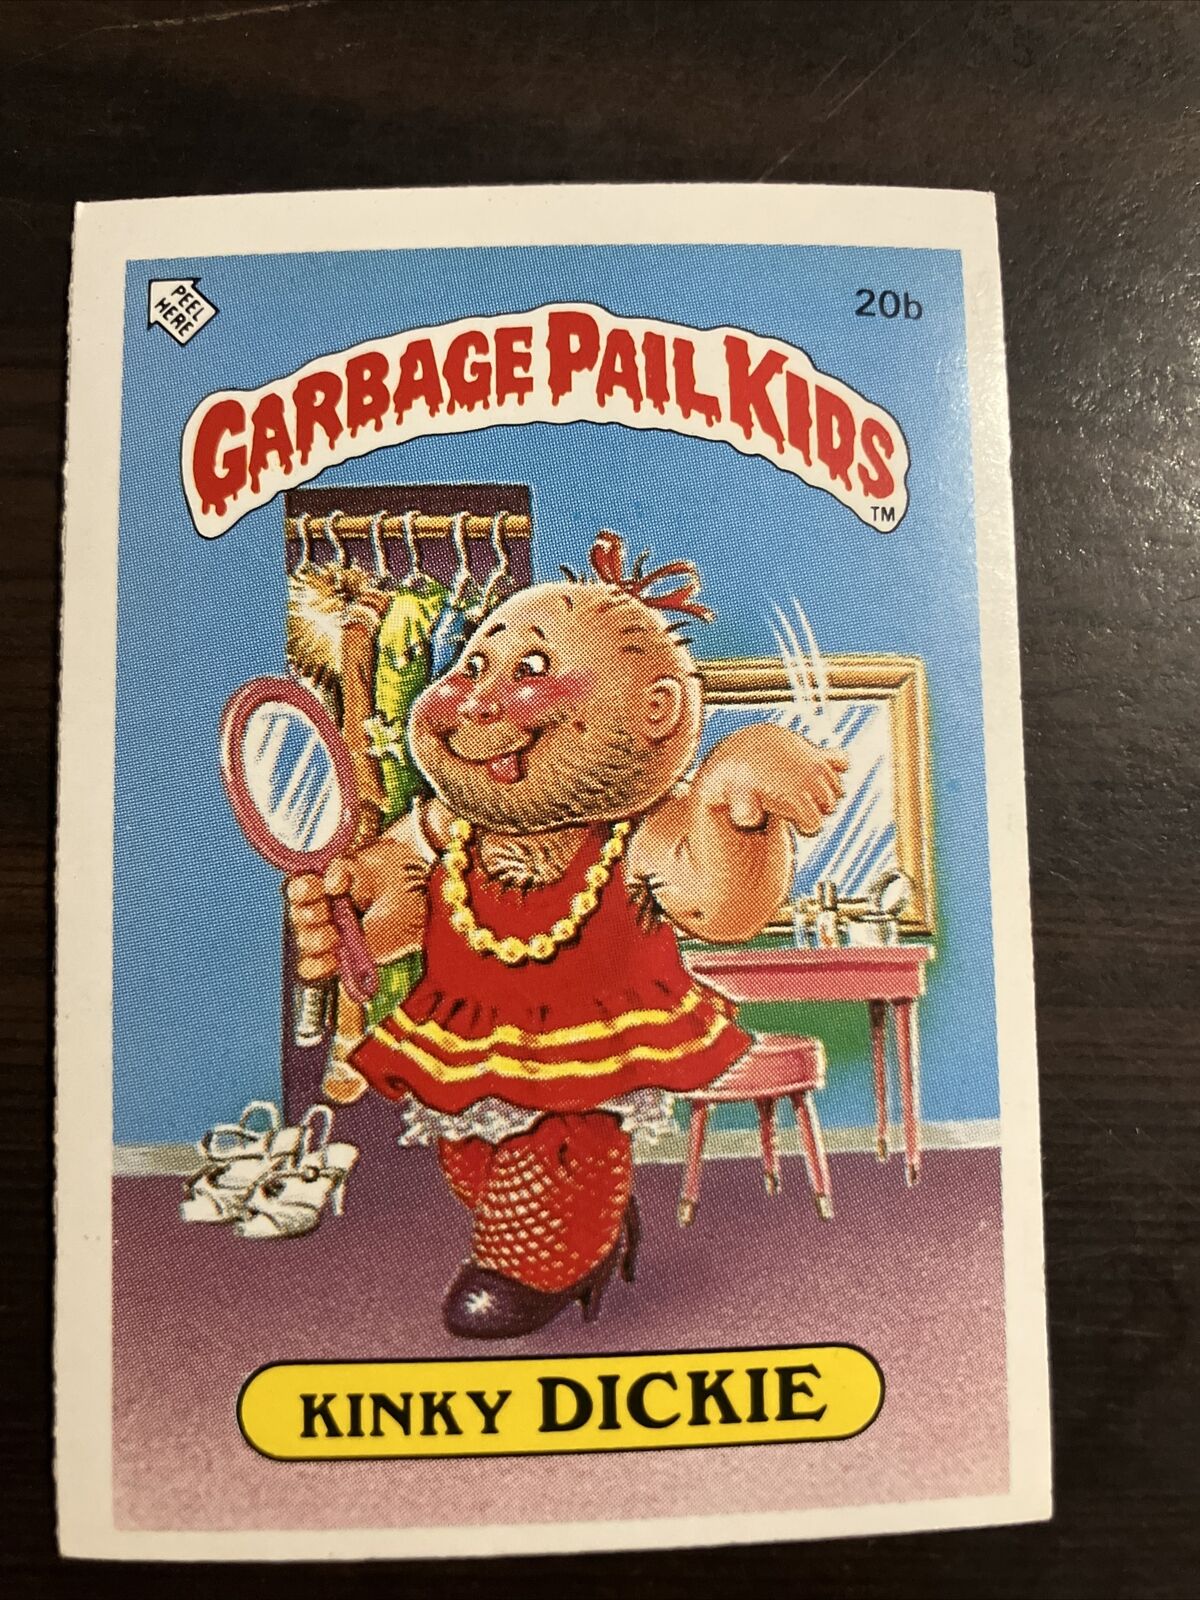 Garbage Pail Kids GPK UK mini Kinky Dickie vintage 1985 British Series 1